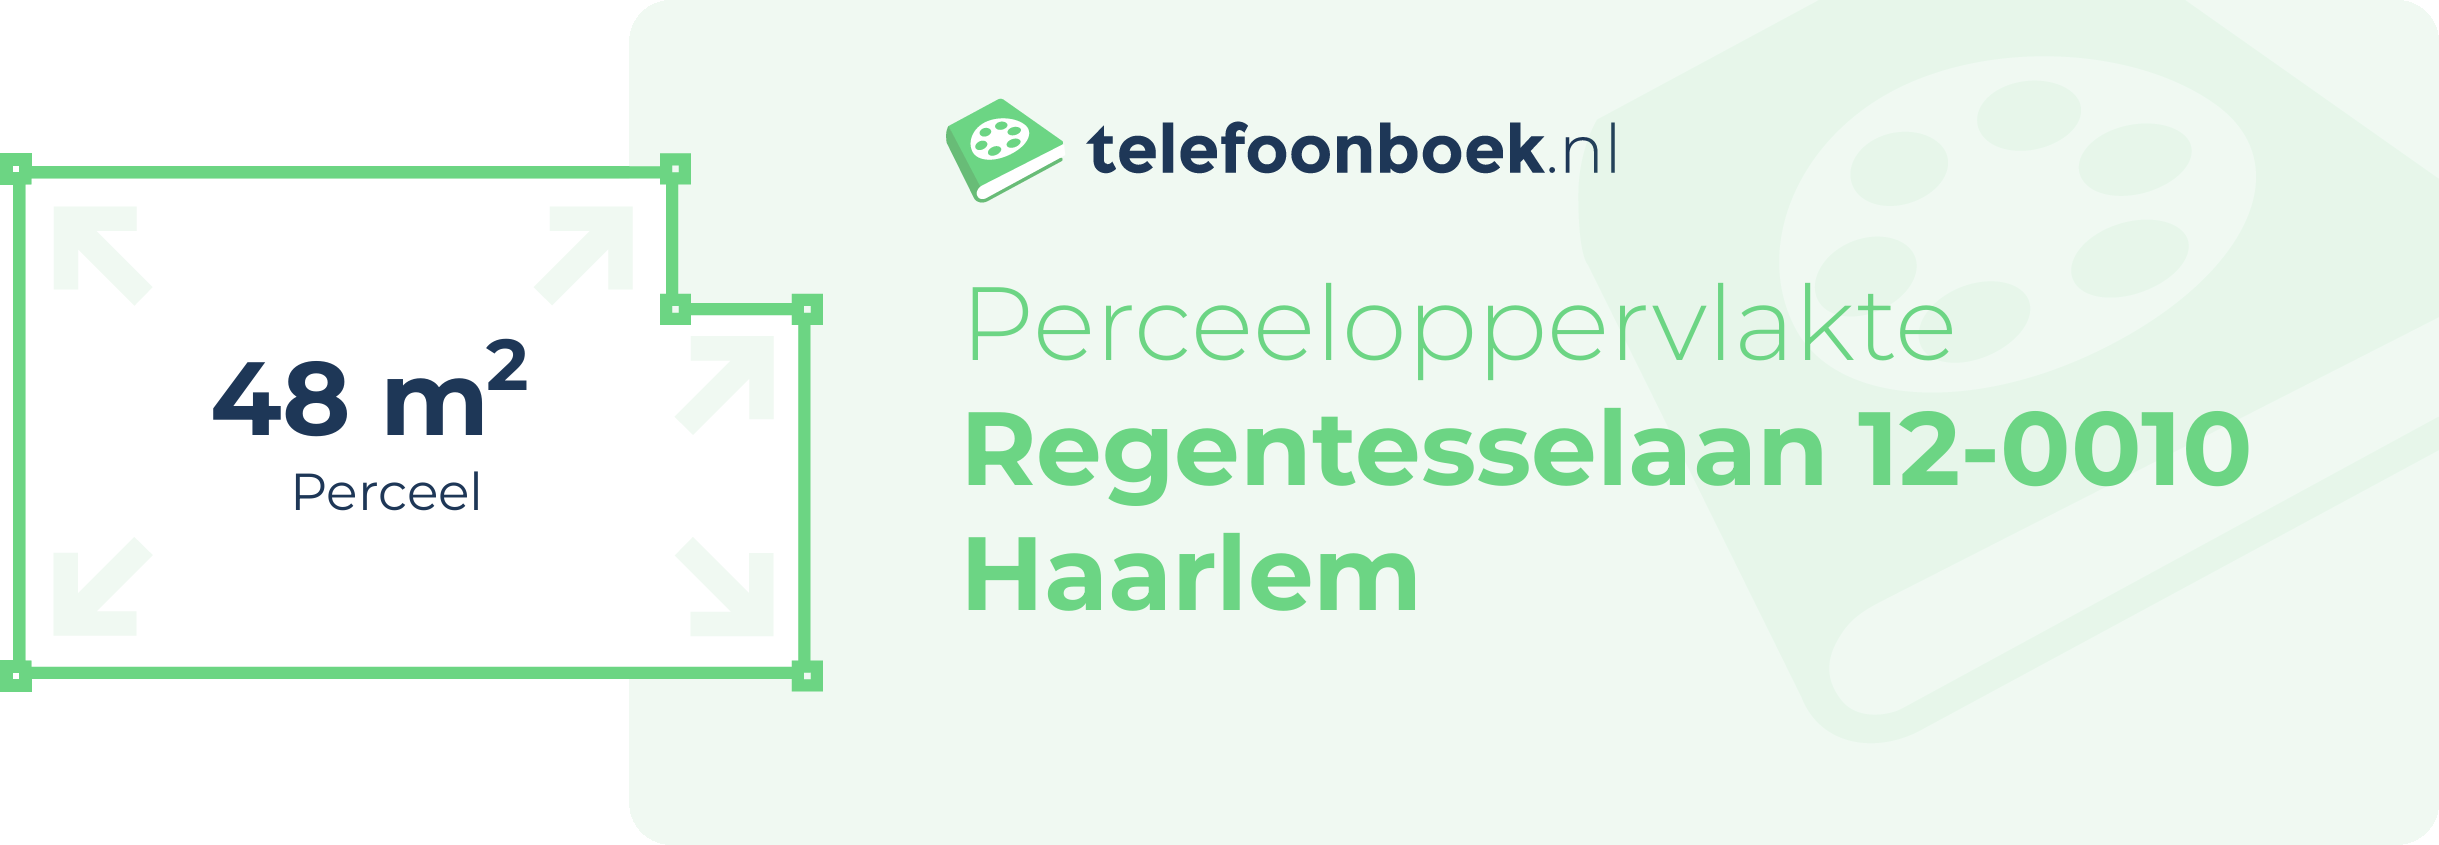 Perceeloppervlakte Regentesselaan 12-0010 Haarlem